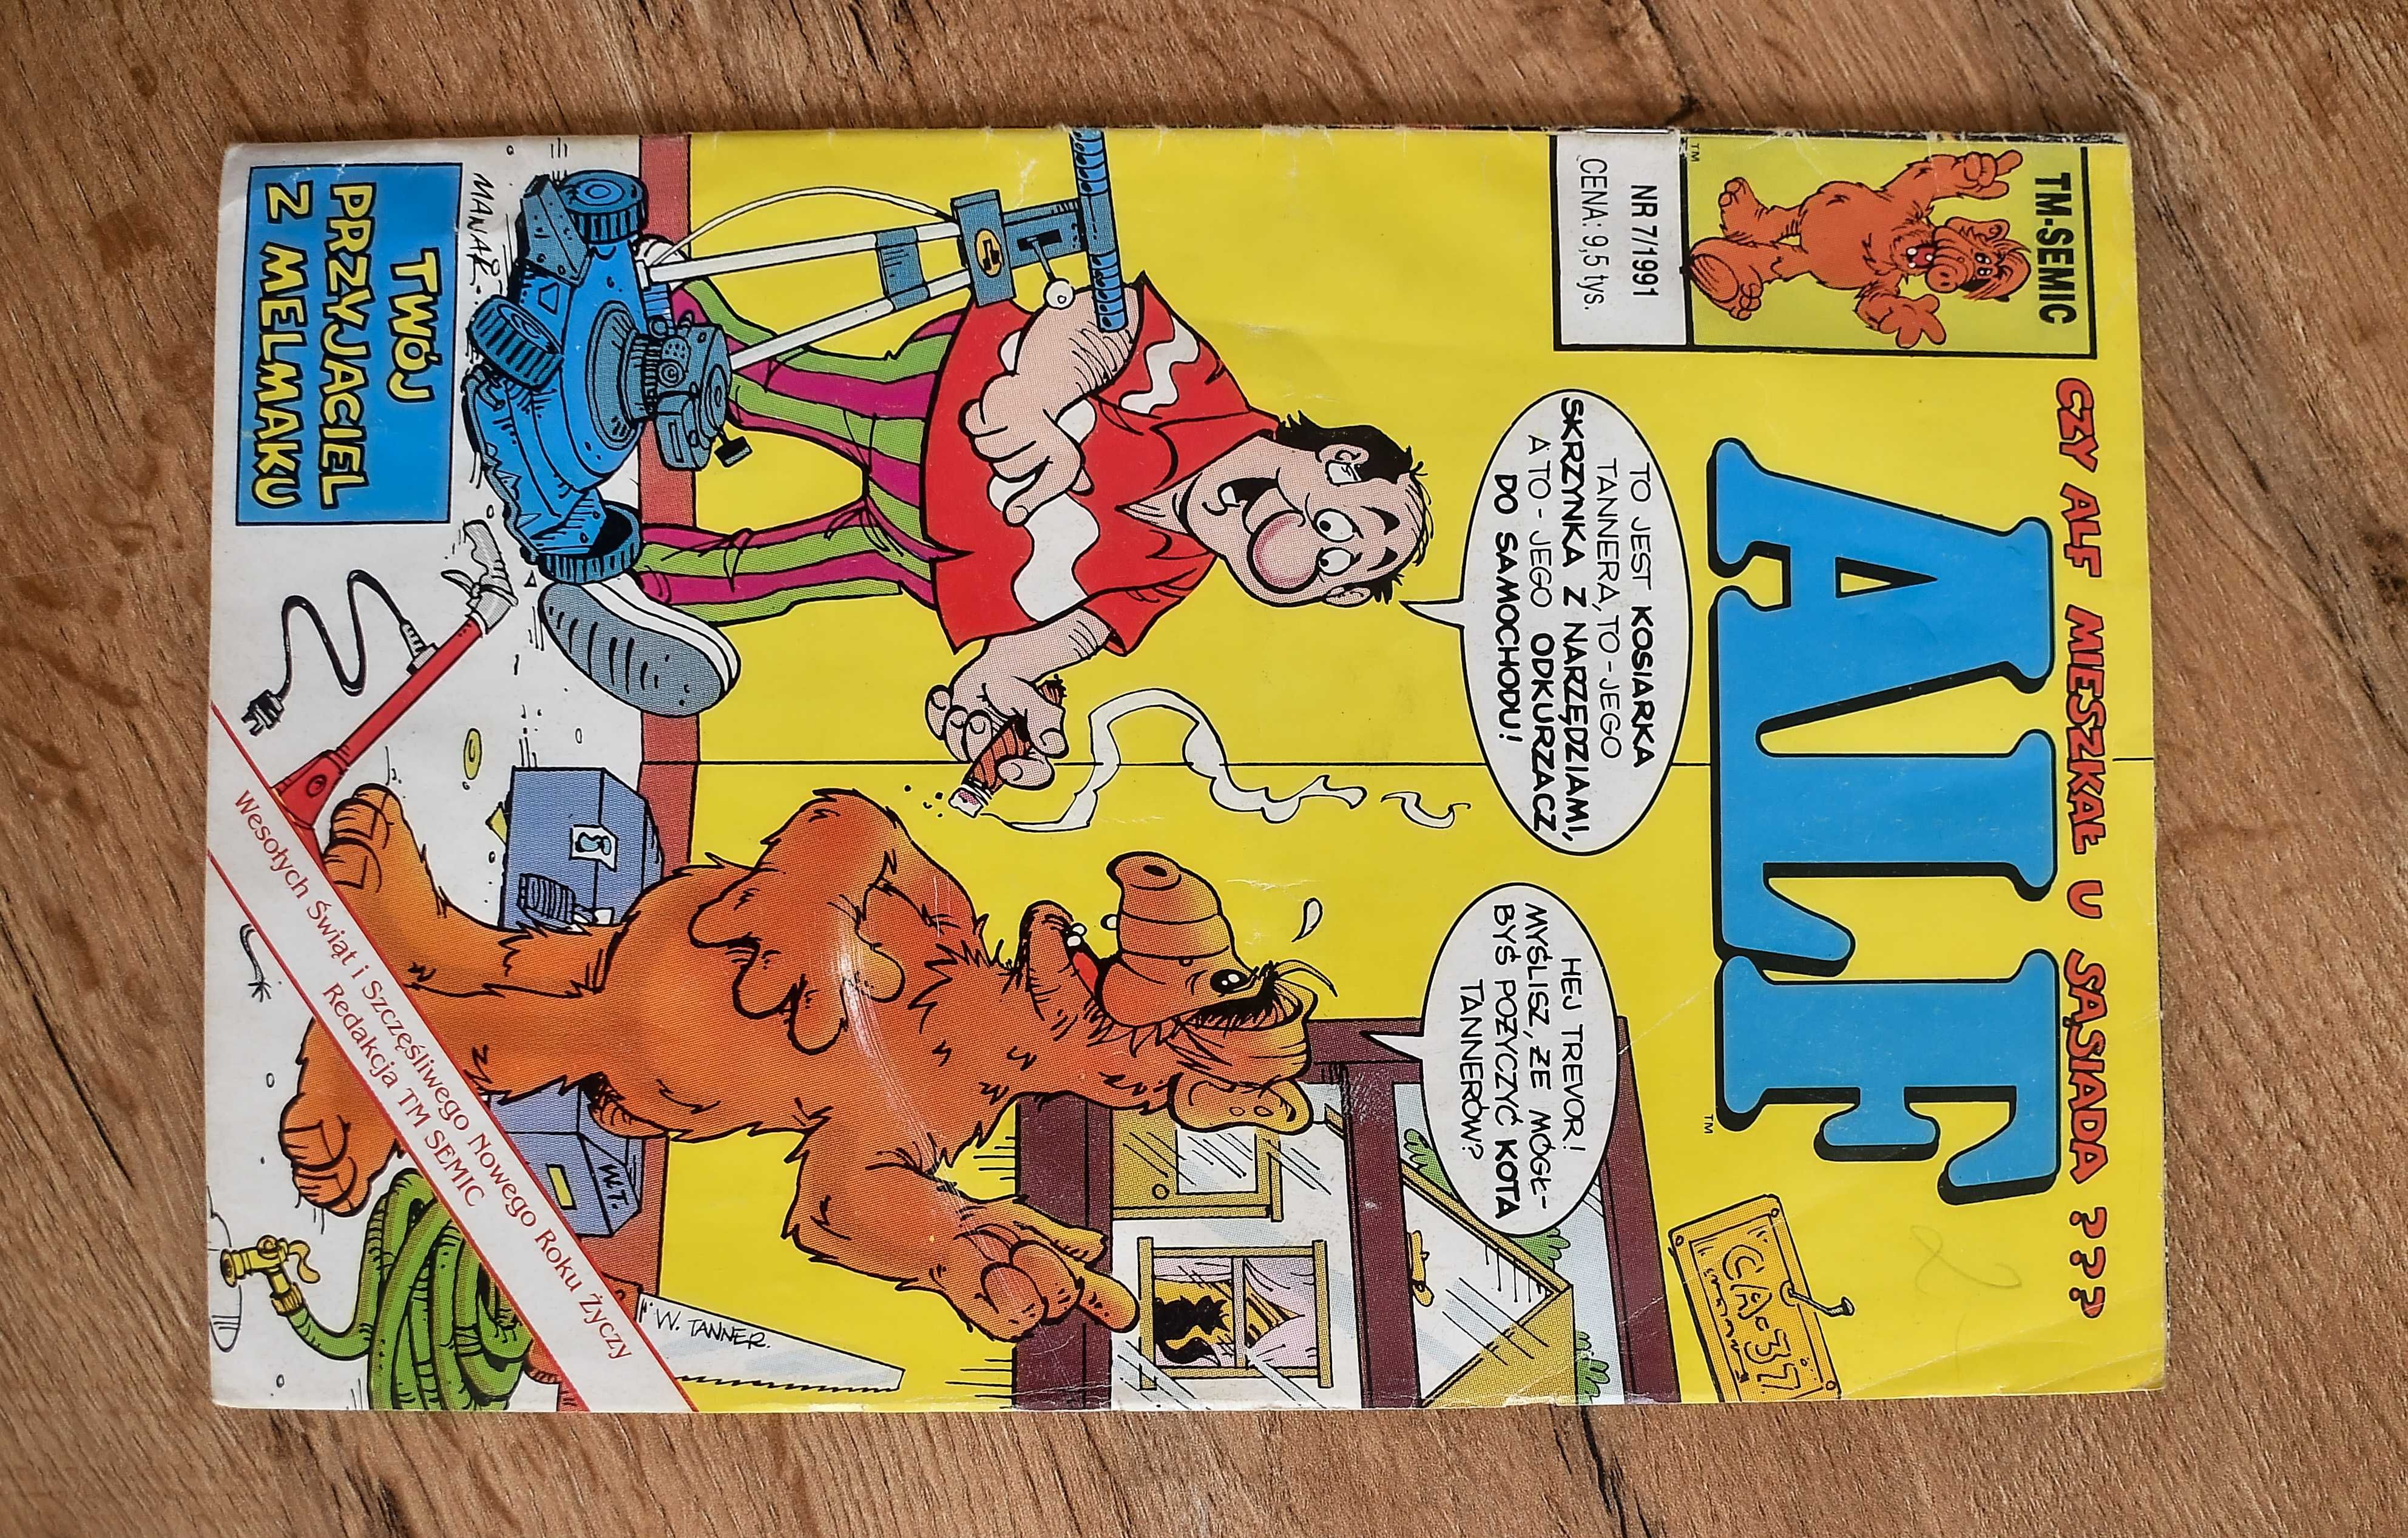 Komiks # Alf nr. 7/1991